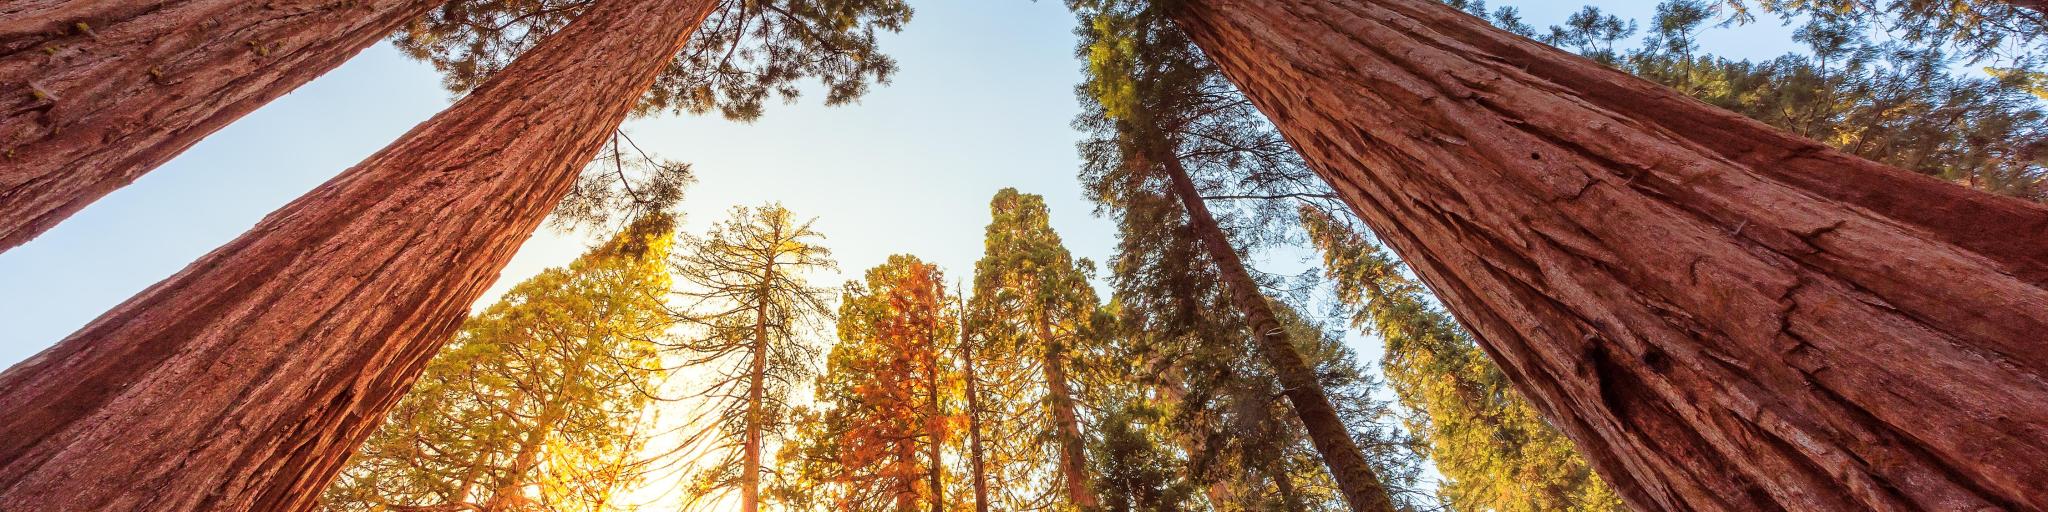 Giant Sequoias Forest. Sequoia National Park in California Sierra Nevada Mountains, USA.